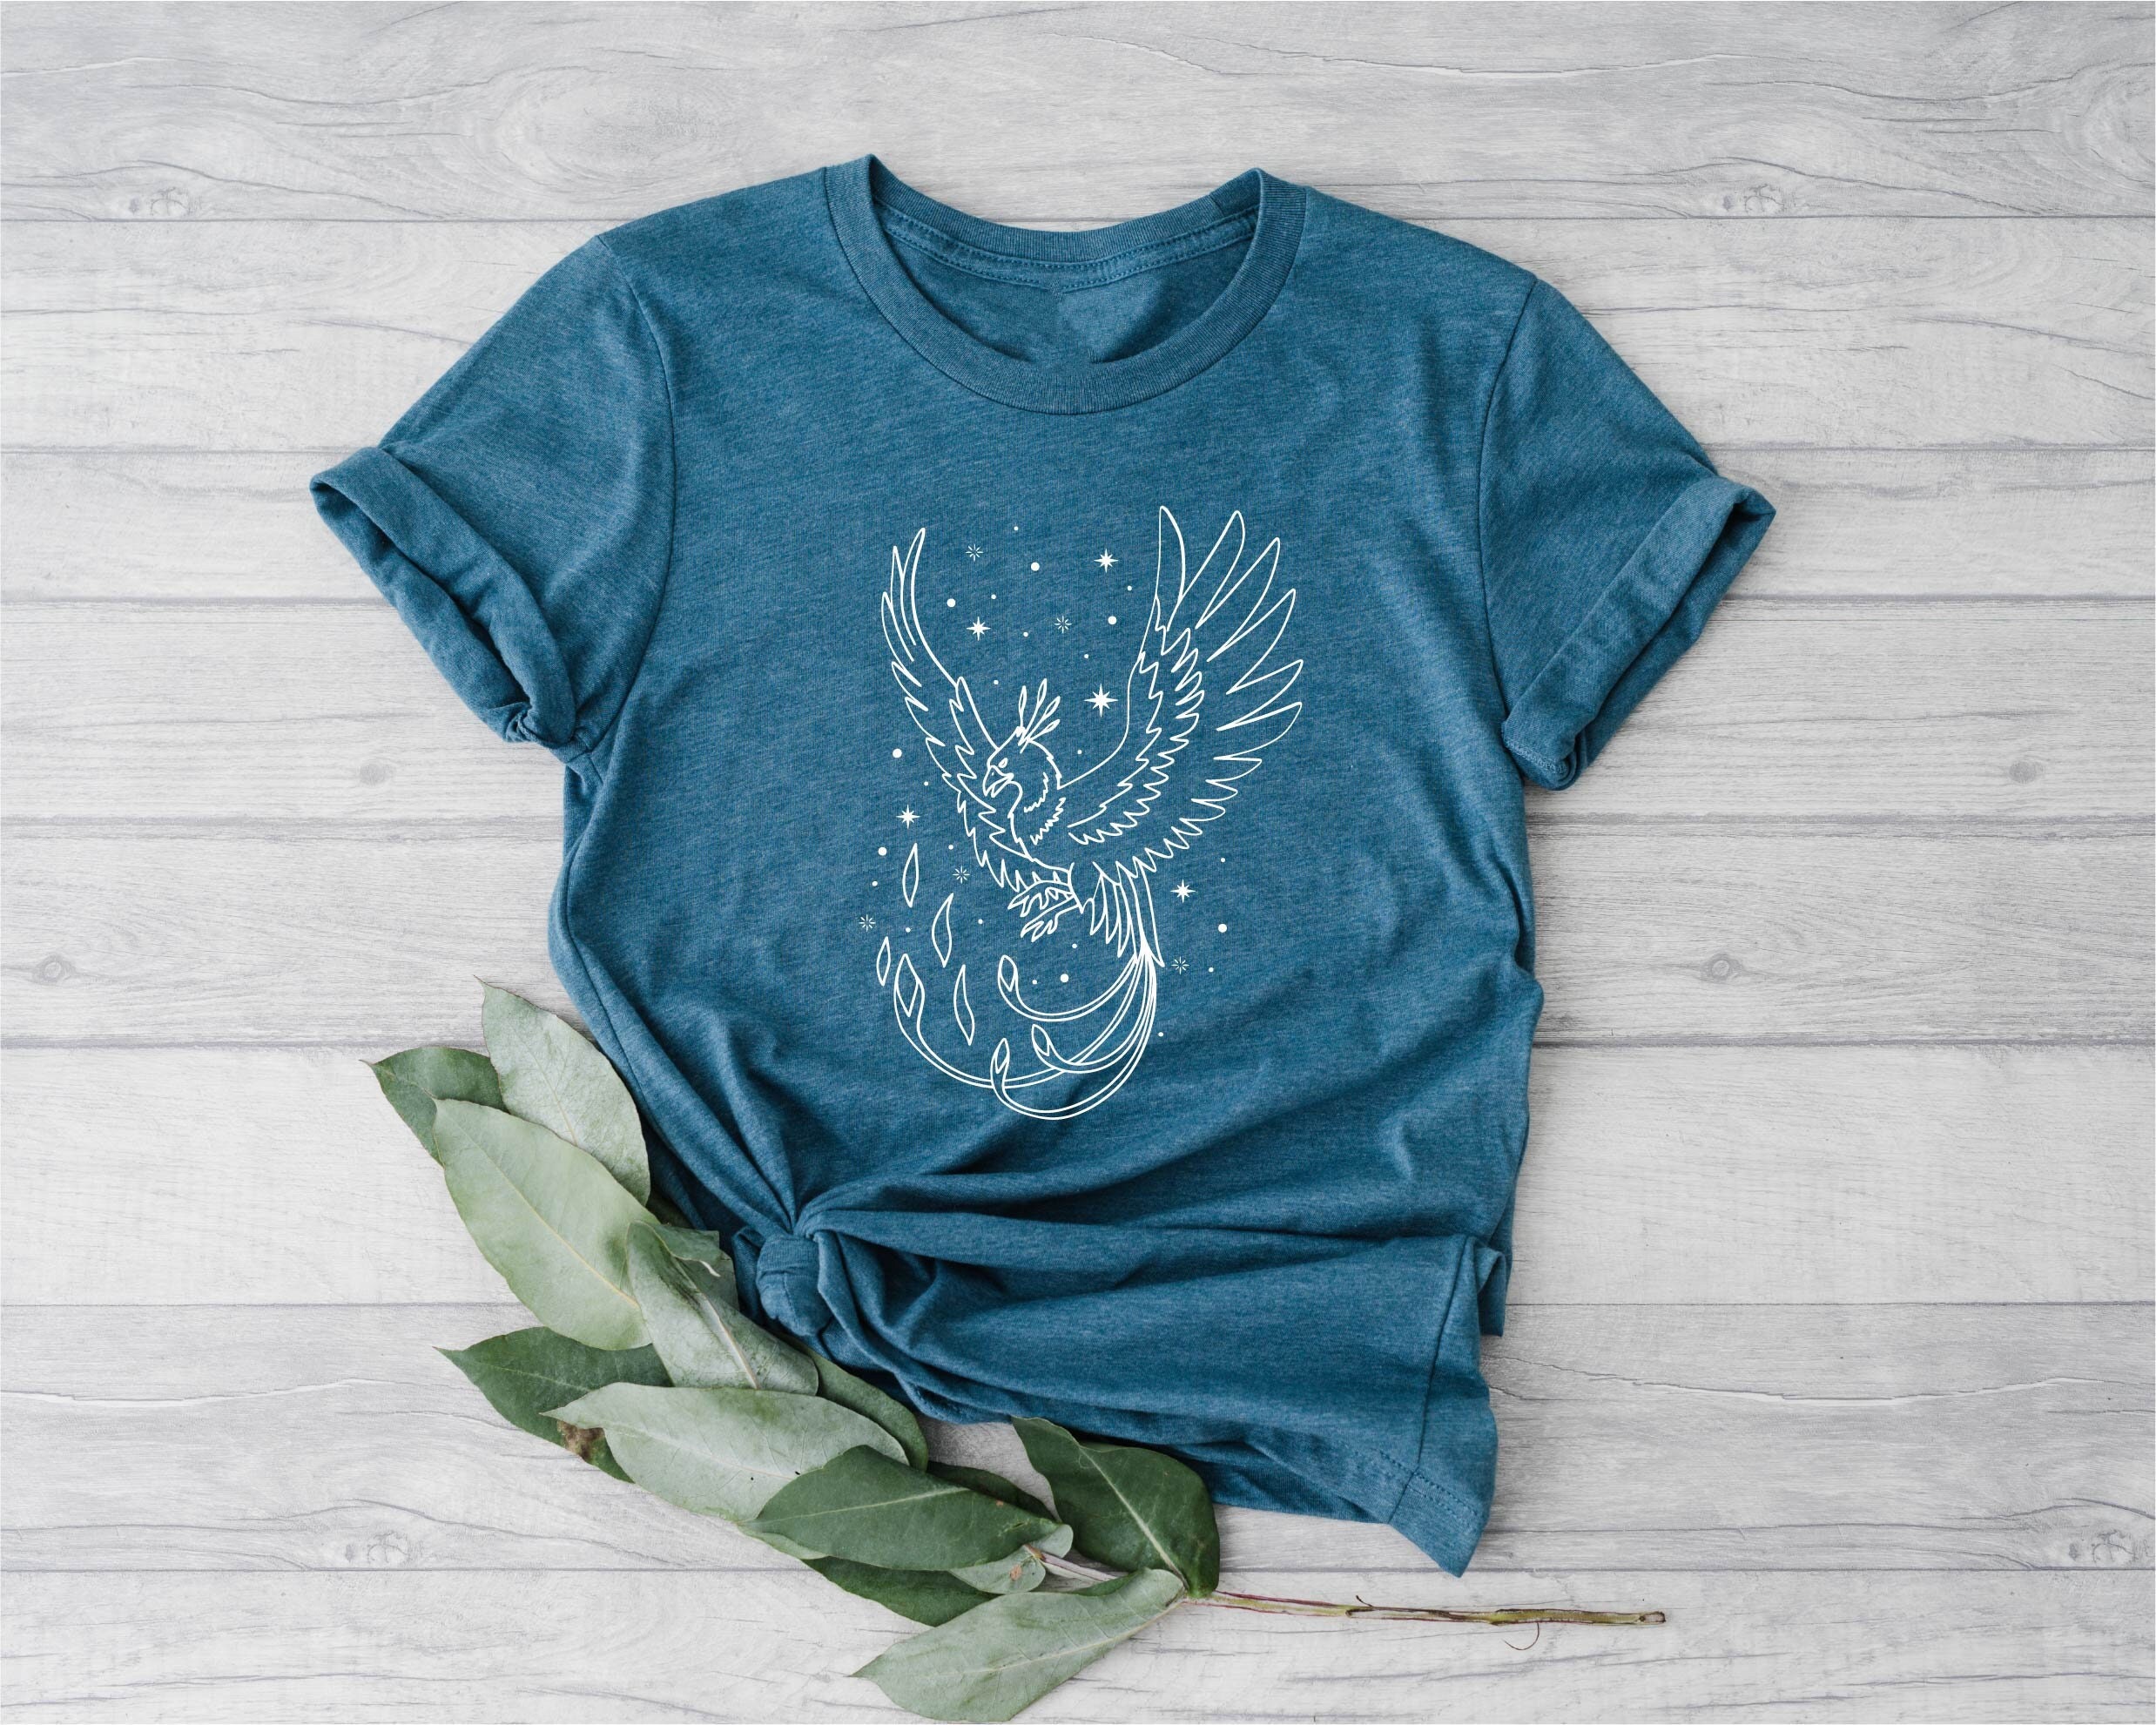 Phoenix T-Shirt Design by LGood20 on DeviantArt